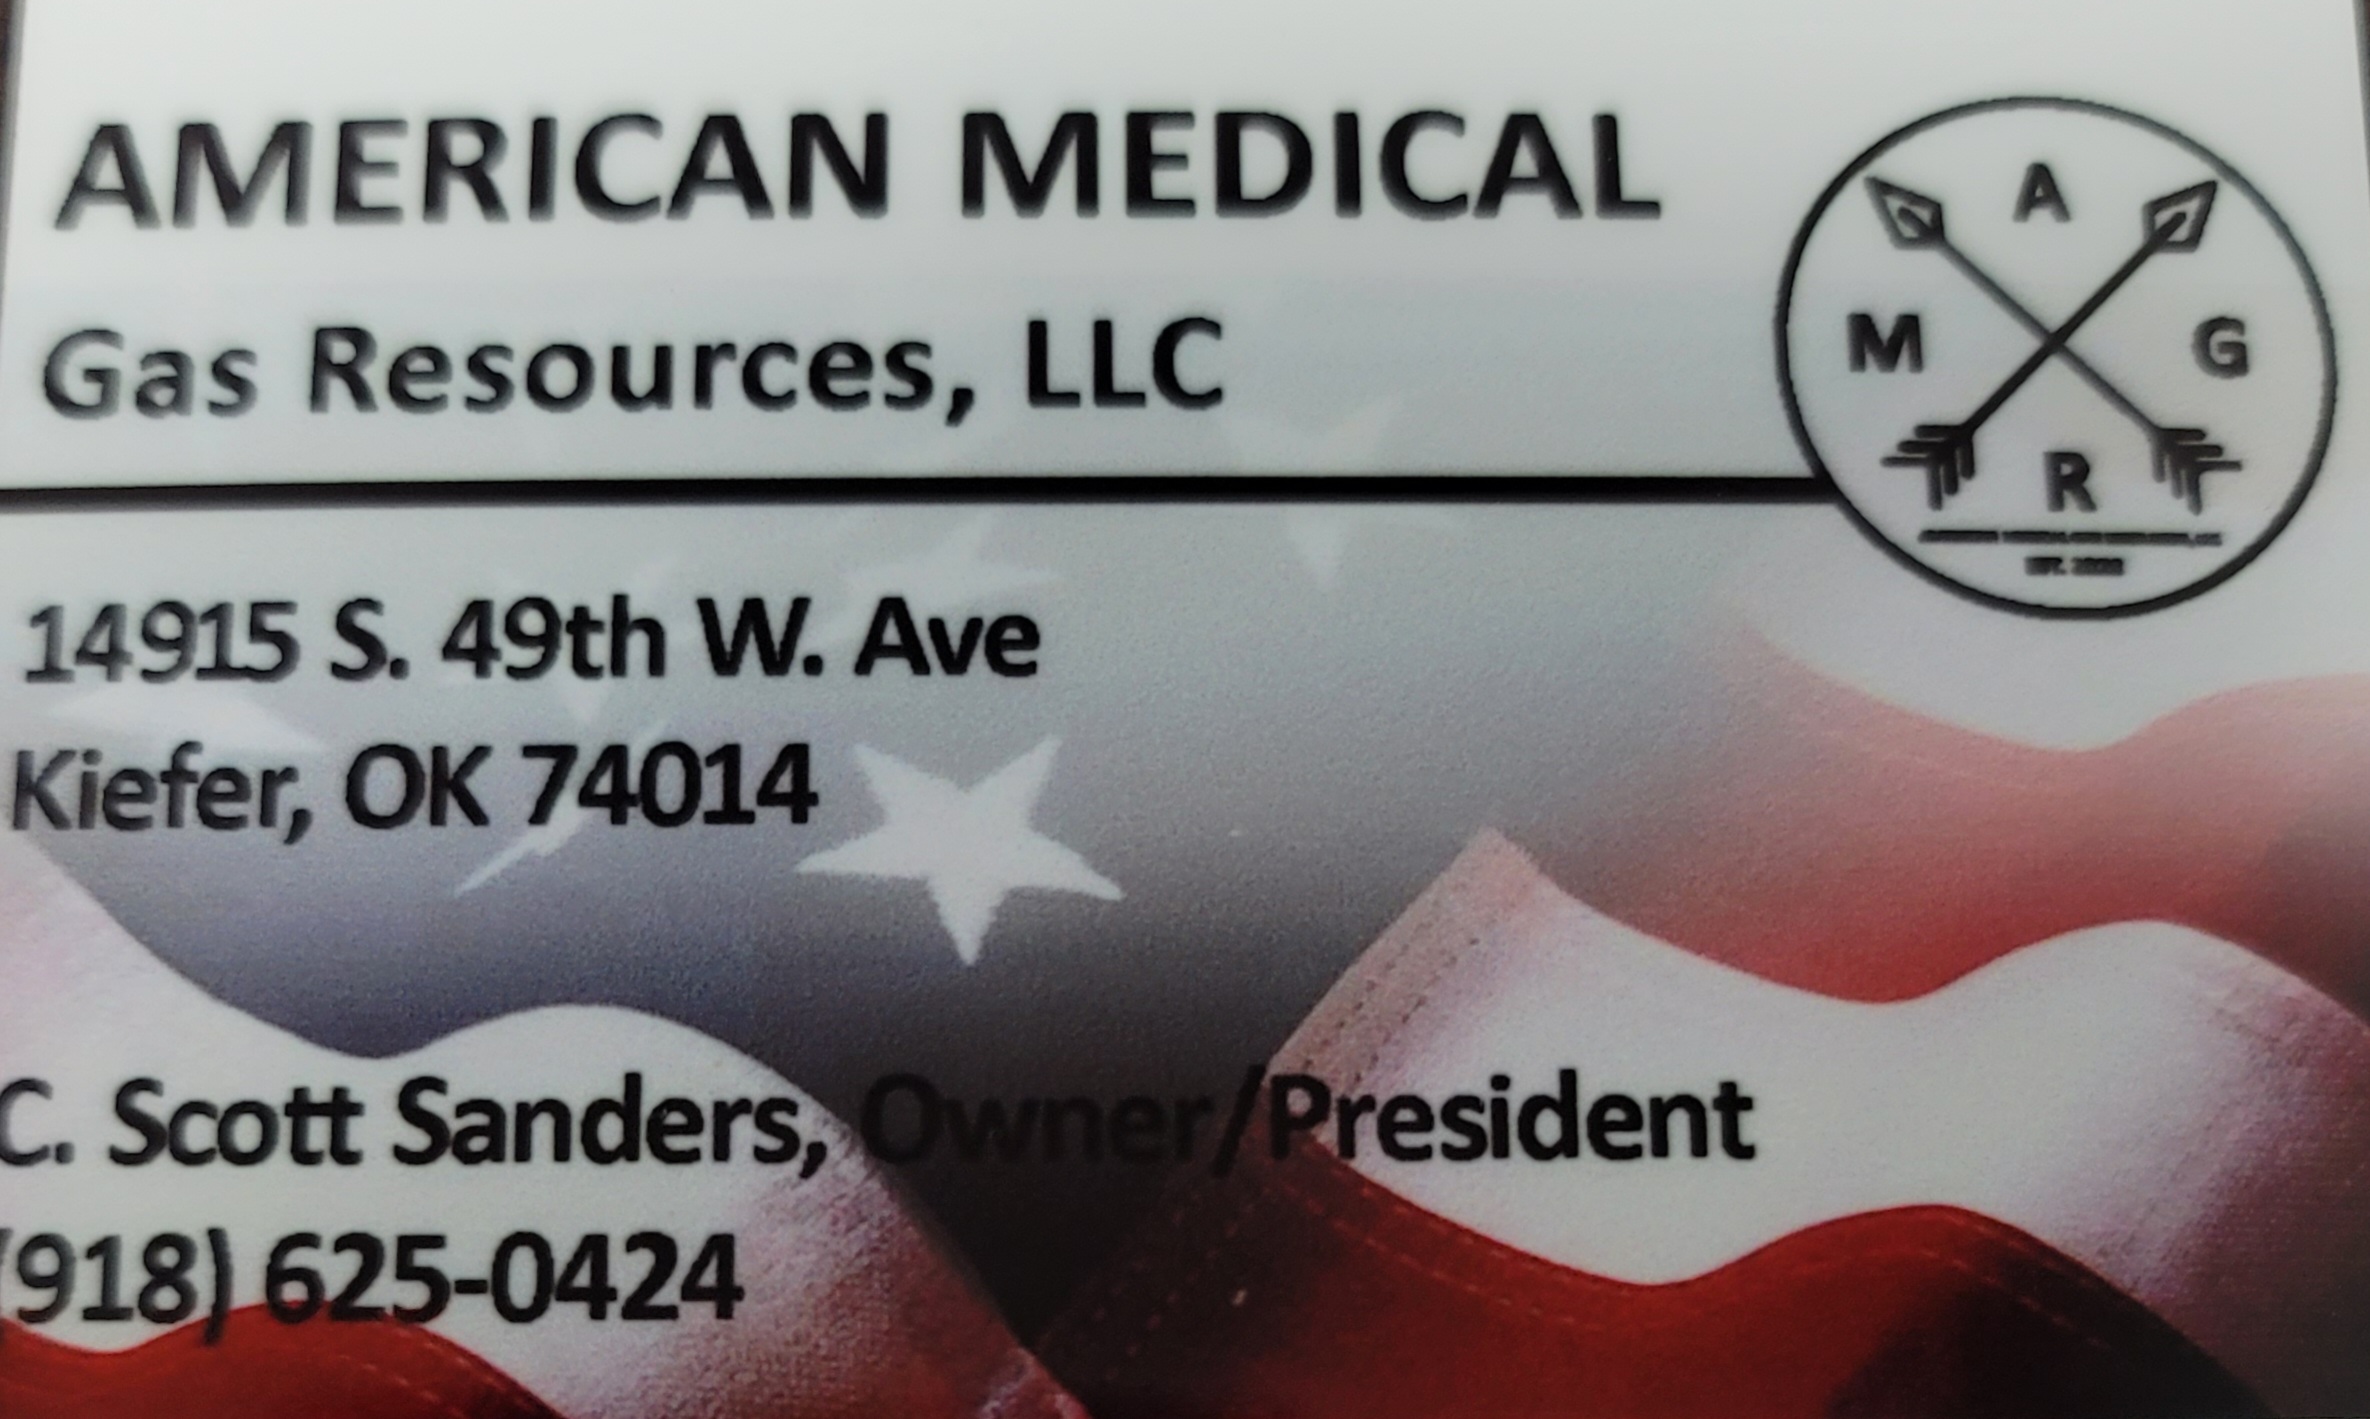 American Medical Gas Resources, LLC